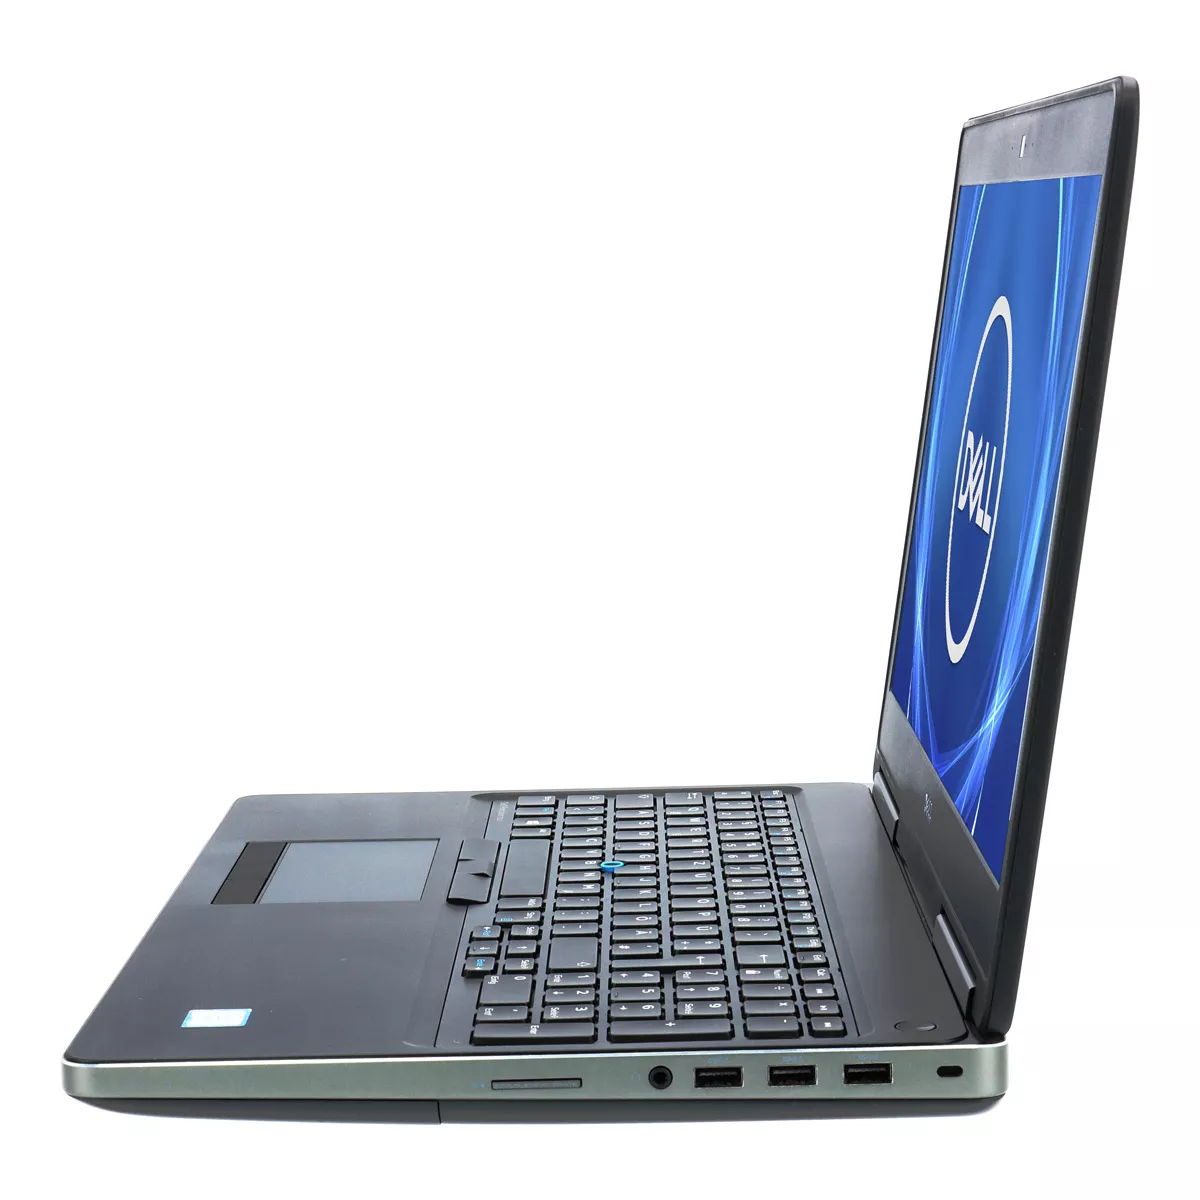 Dell Precision 7520 Core i7 7920HQ nVidia Quadro M2200M Full-HD 500 GB M.2 nVME SSD Webcam B